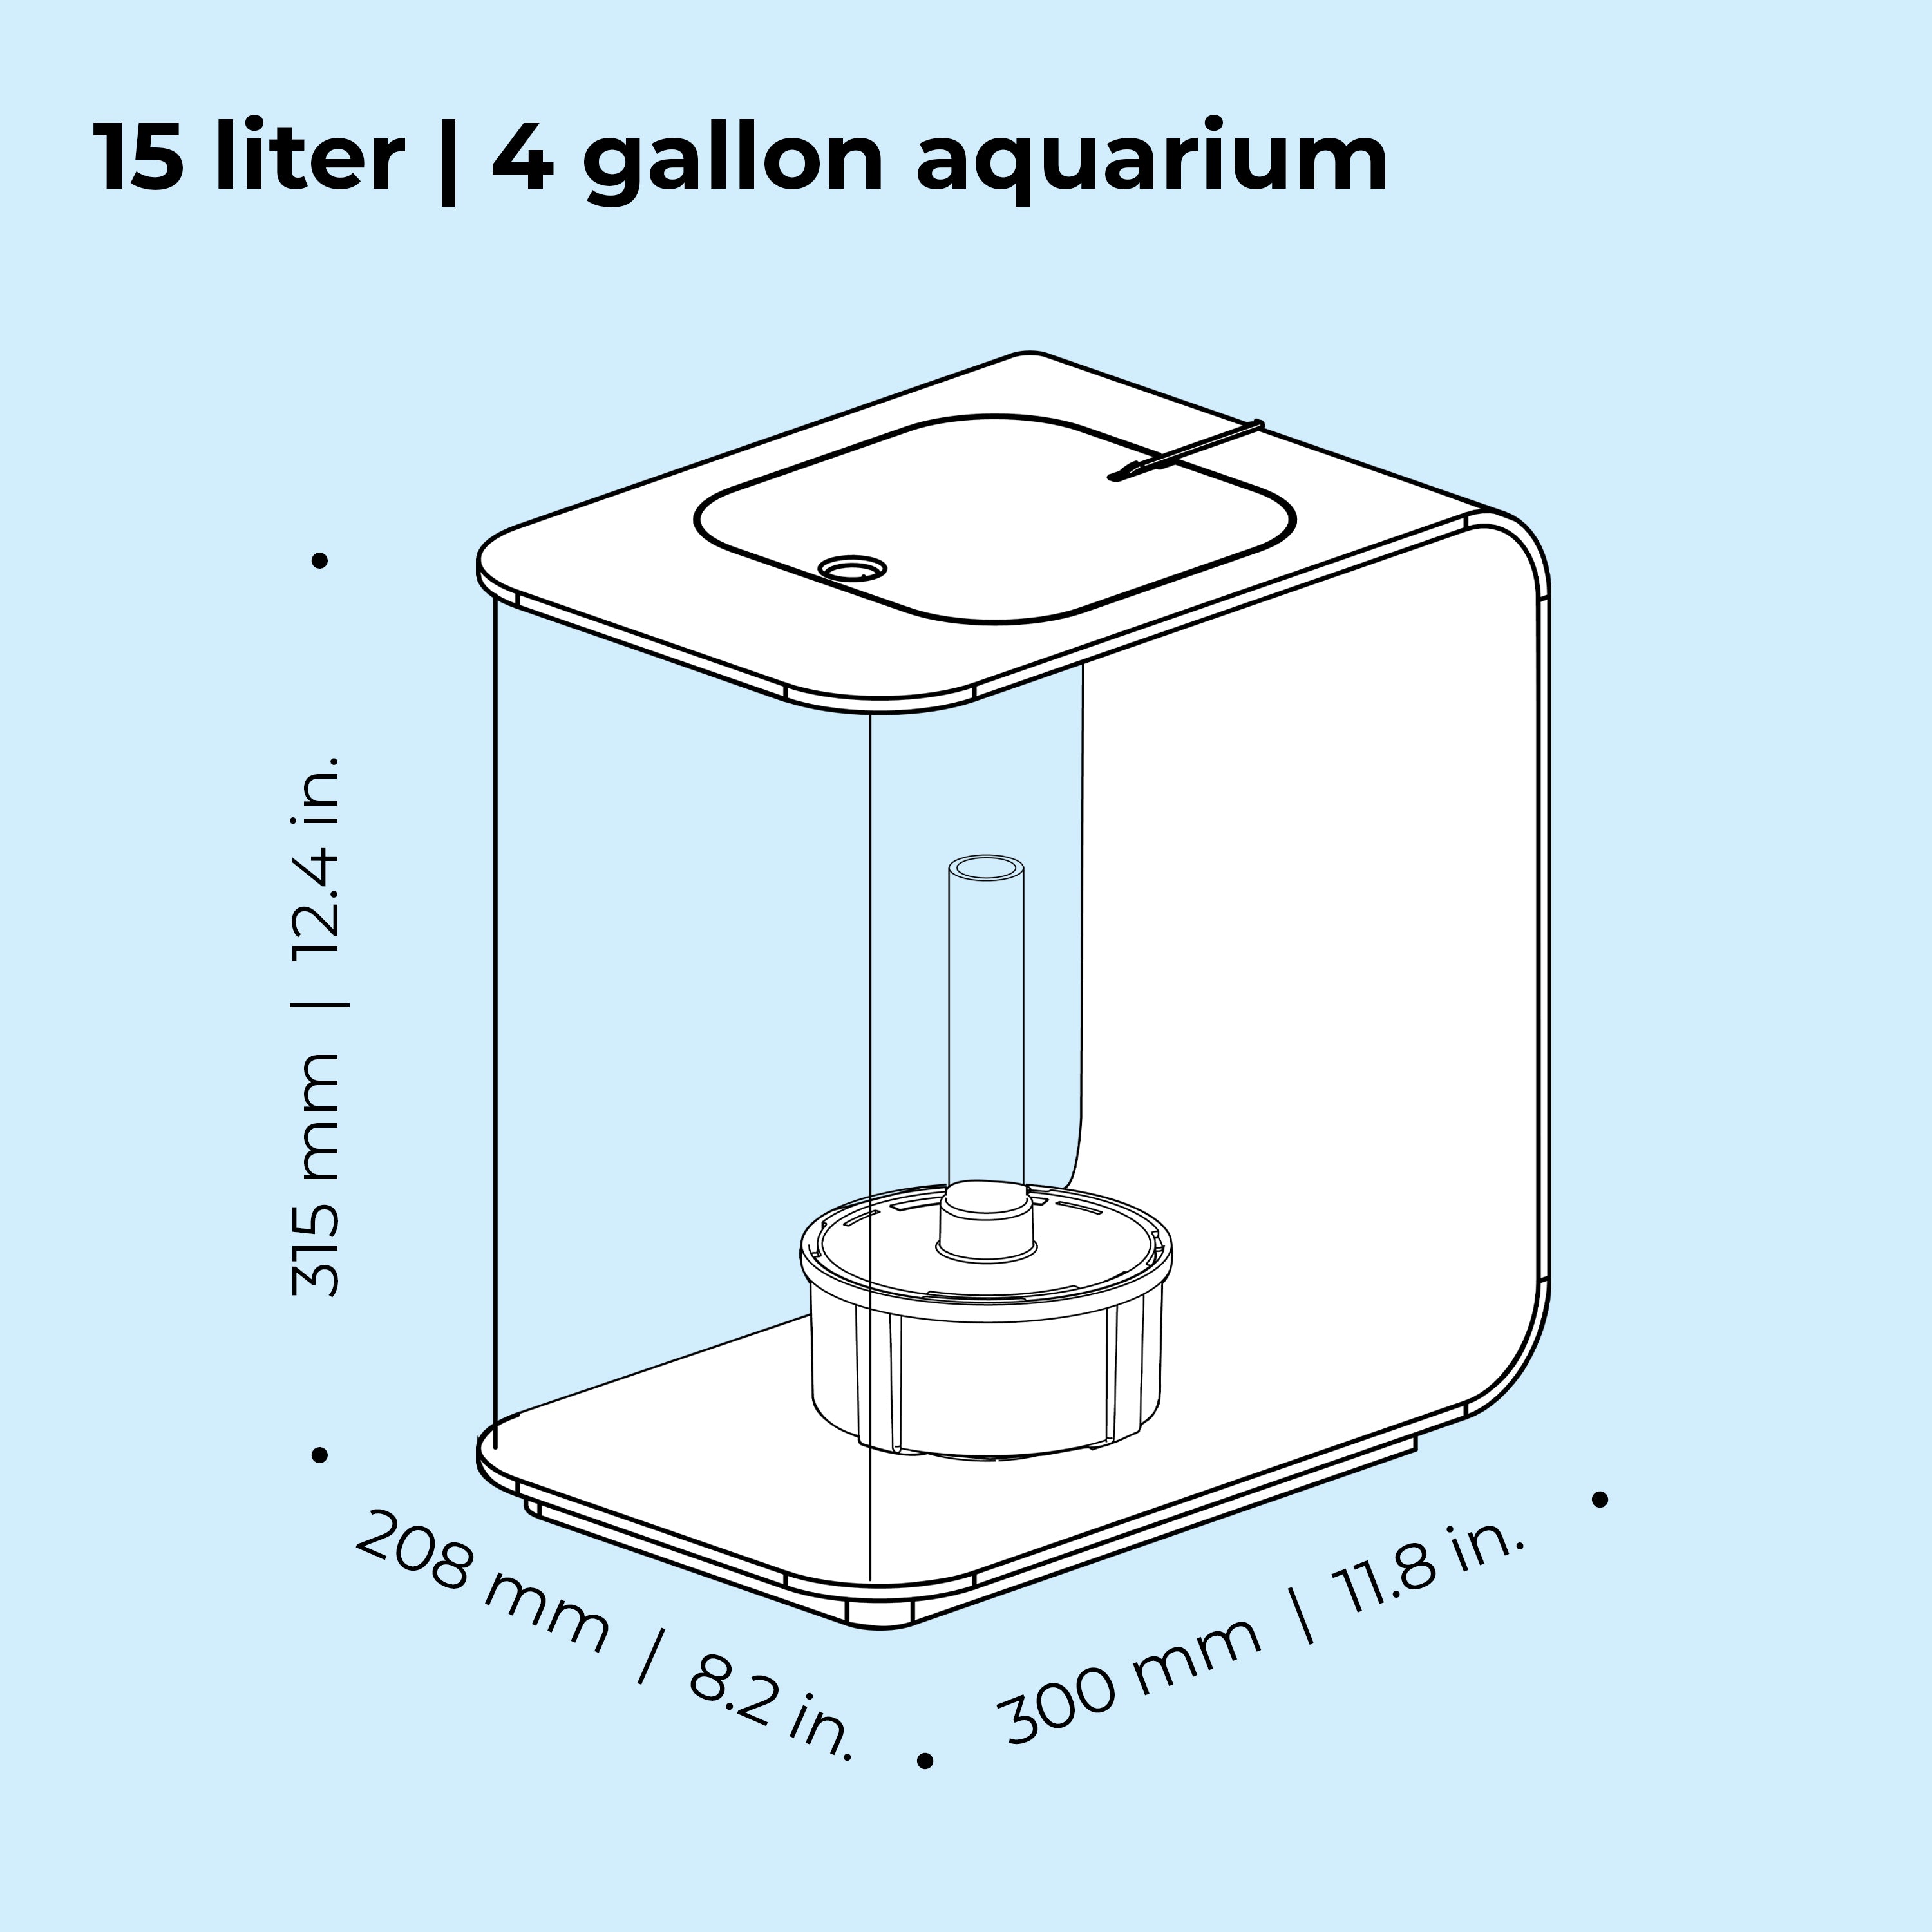 FLOW 15 Aquarium with MCR Light - 4 gallon, 15 liter dimension chart